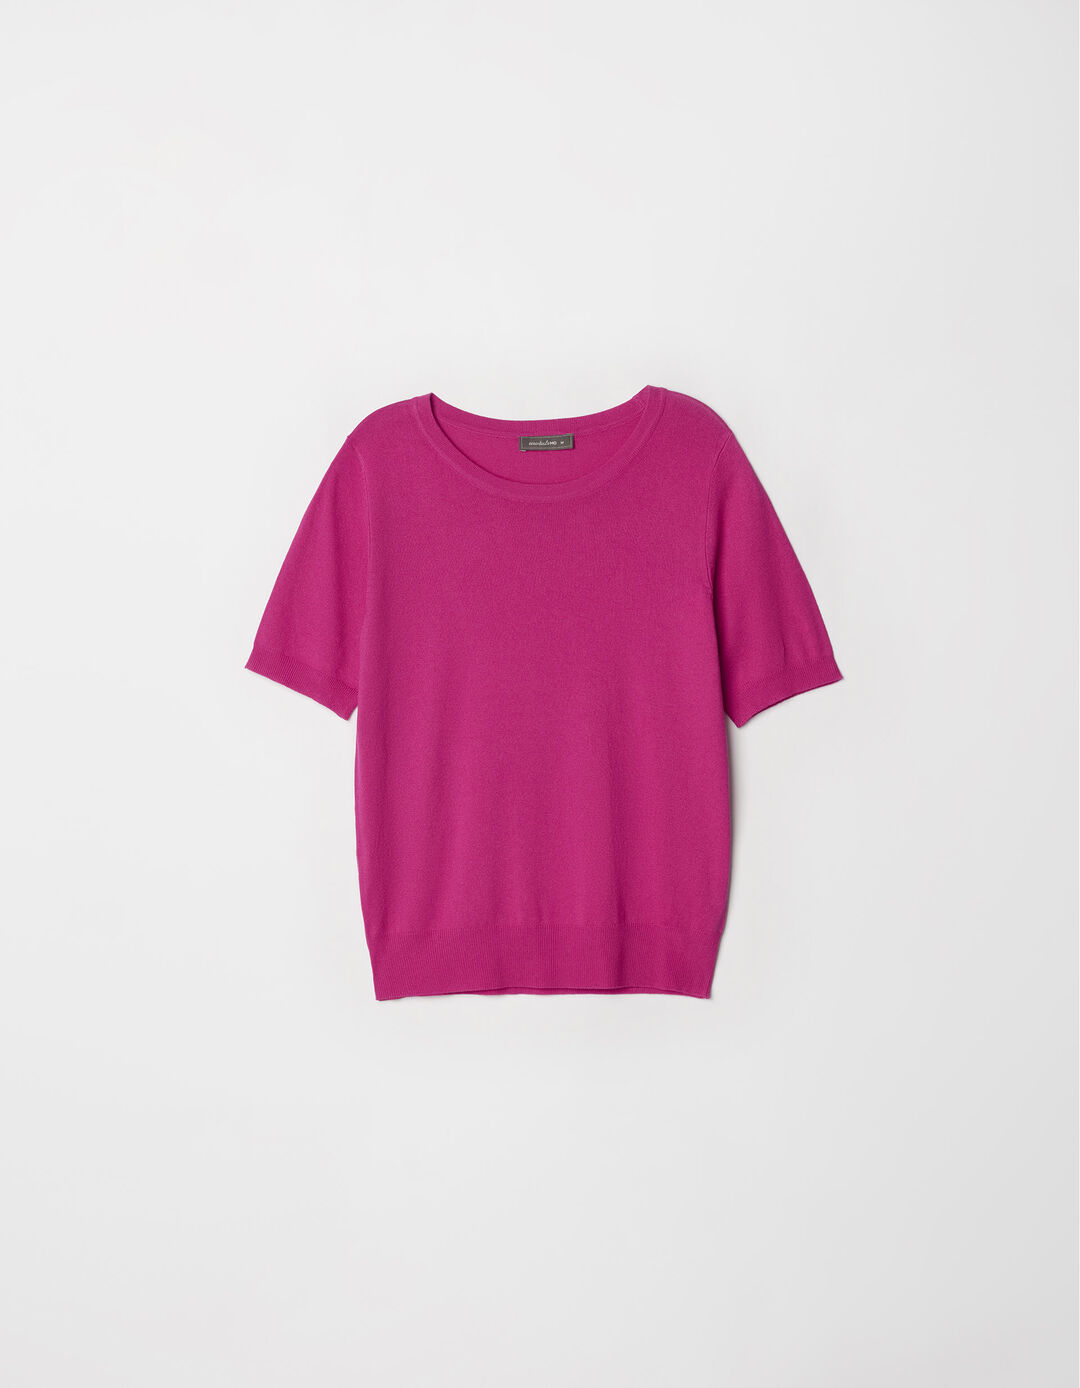 Mesh T-shirt, Woman, Dark Pink